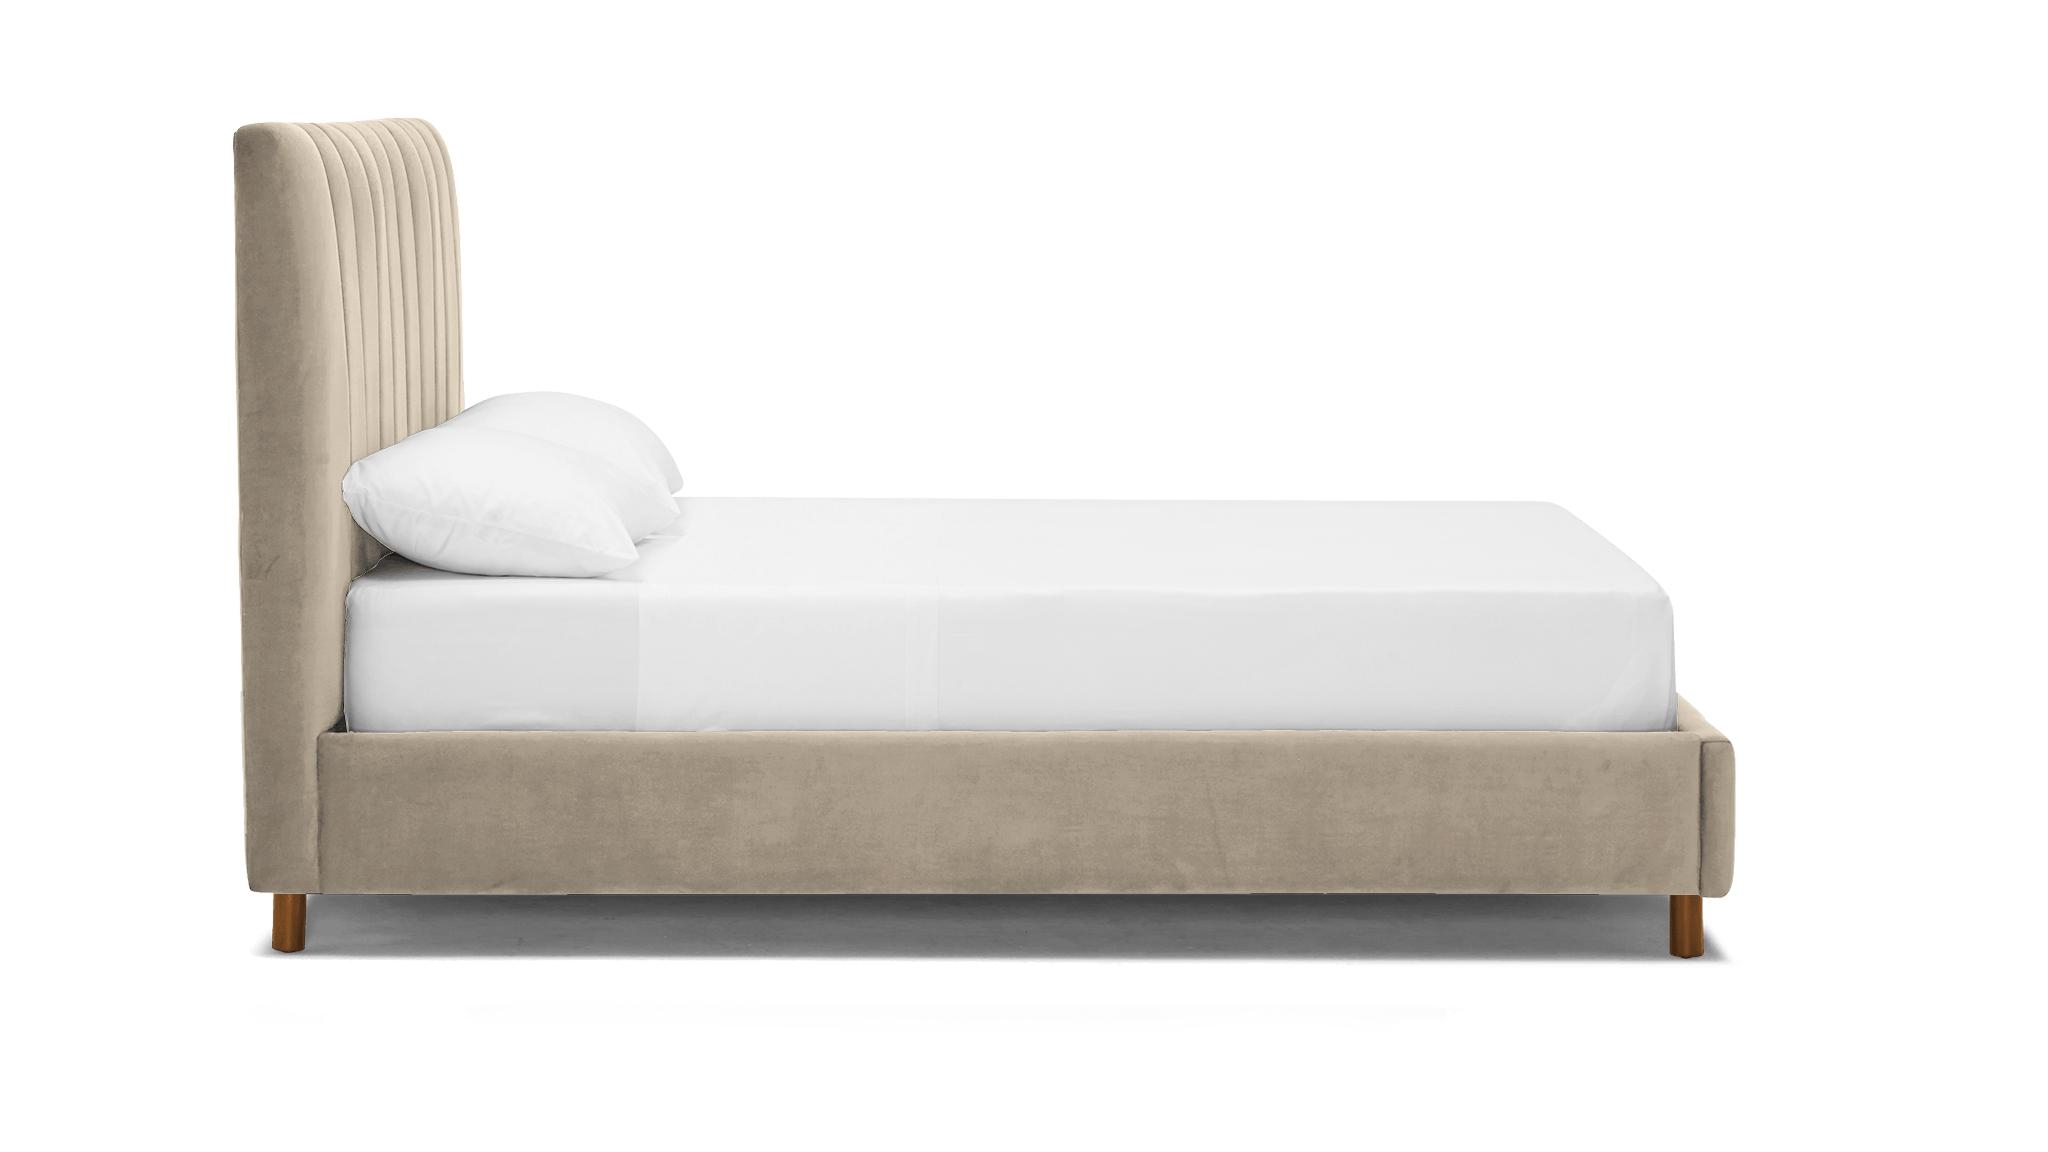 Beige/White Lotta Mid Century Modern Bed - Cody Sandstone - Mocha - Queen - Image 2